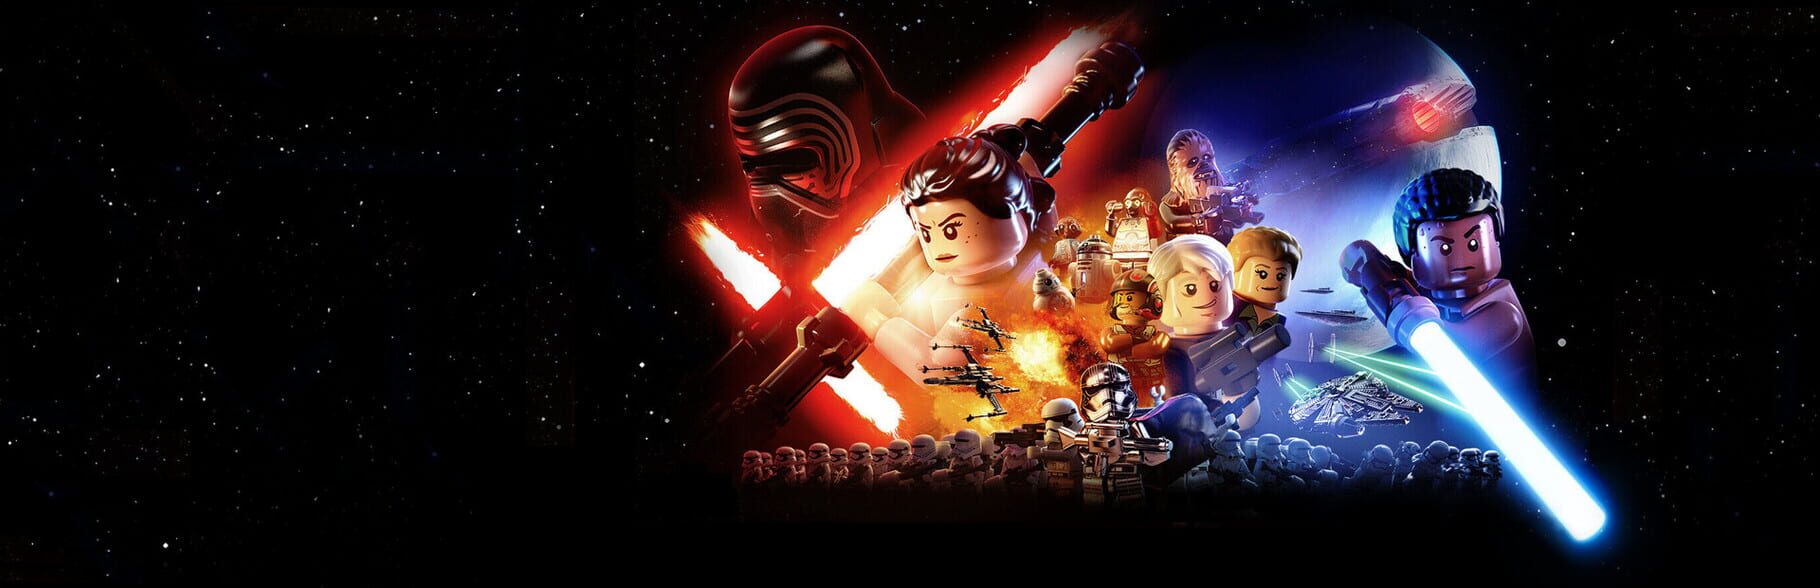 Artwork for LEGO Star Wars: The Force Awakens